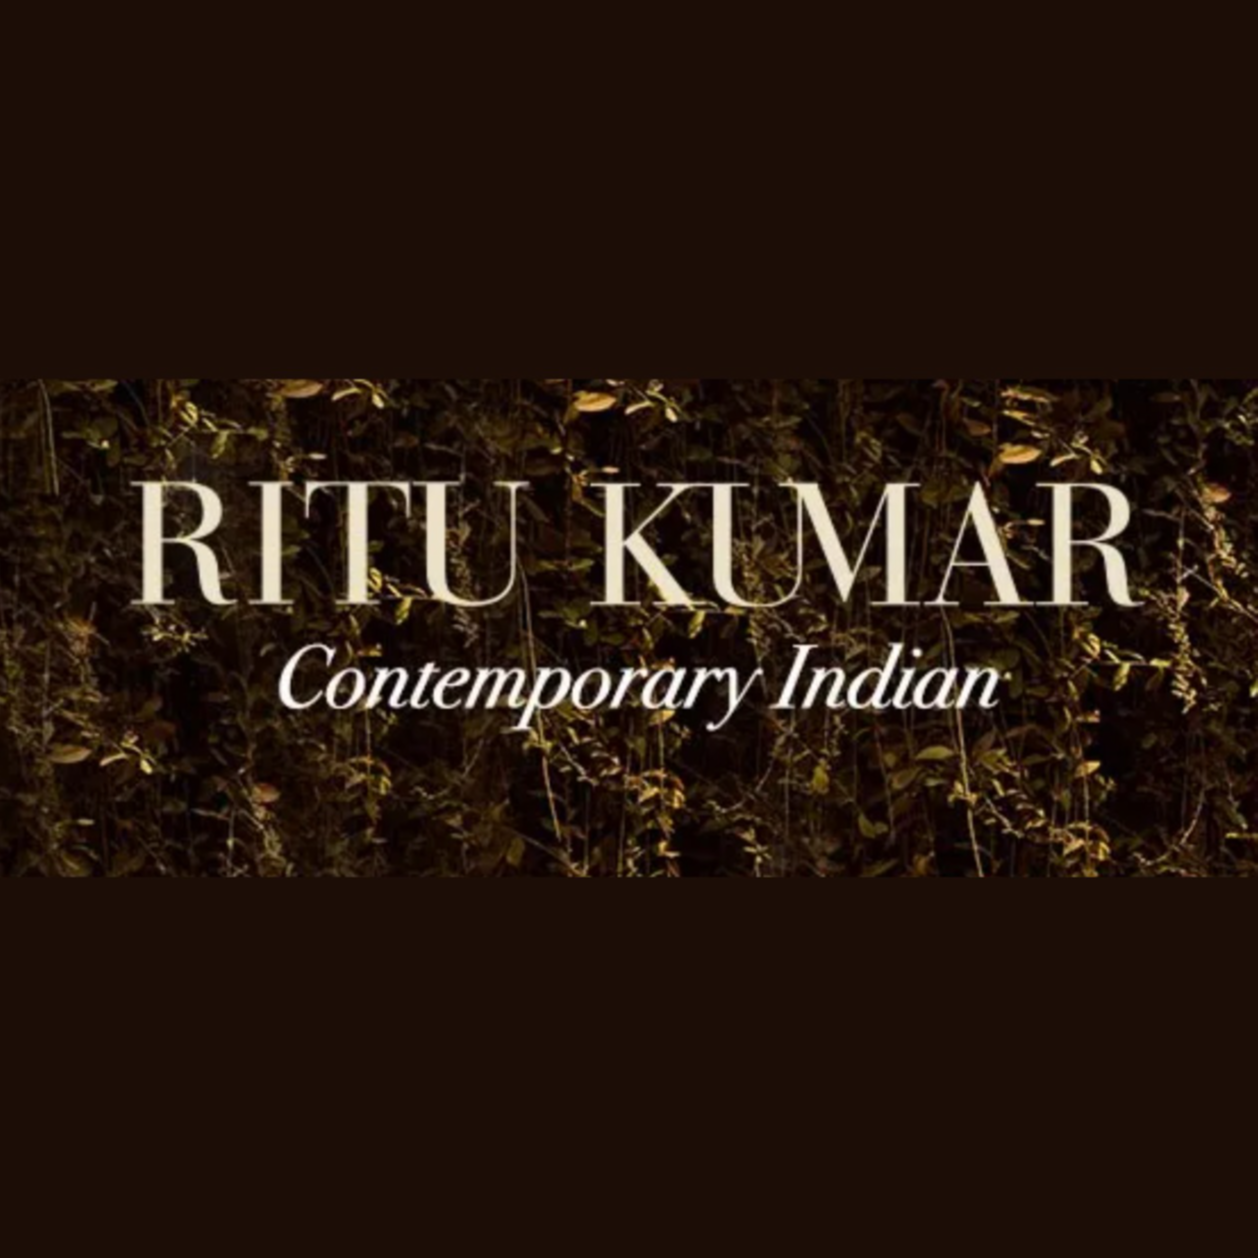 Ritukumar.com | Ritu Kumar® Official Site